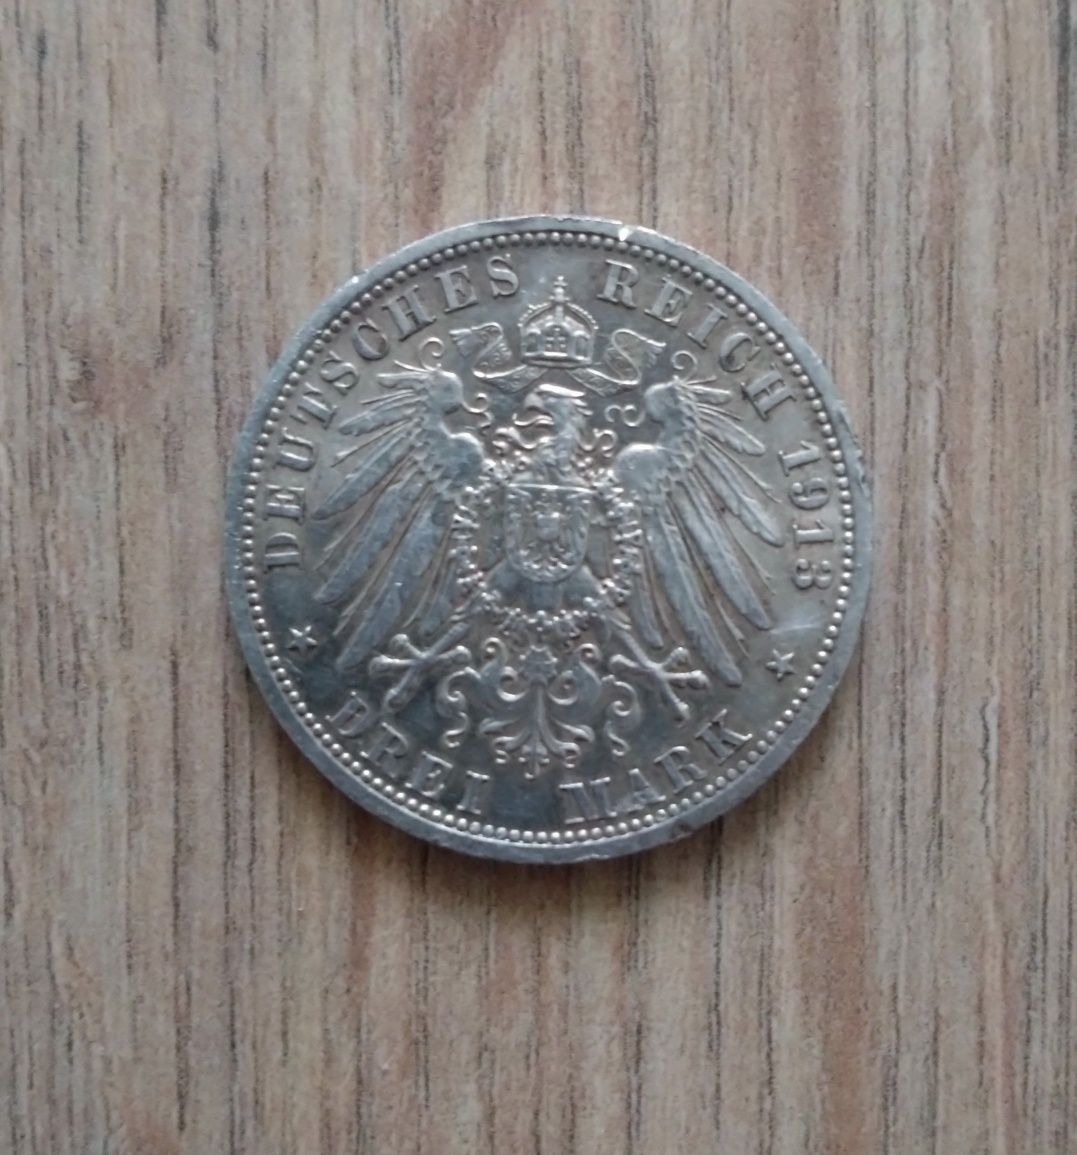 Niemcy 3 marki 1913 r. Wilhelm II 16,67 g Srebro 900. Piękna